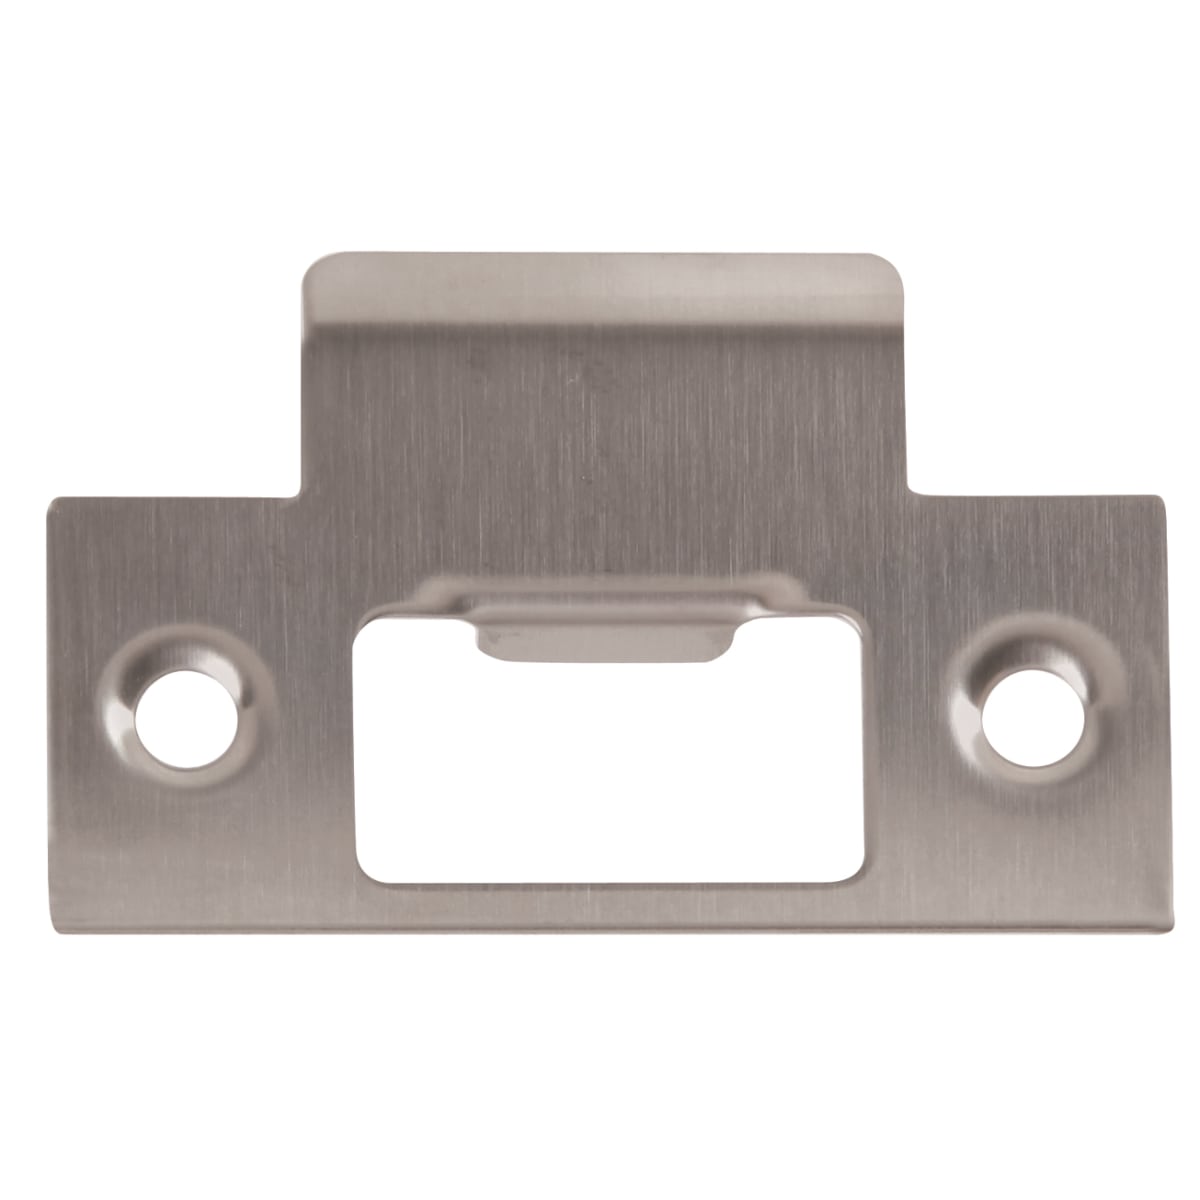 Single Polished Stainless Steel Door Strike Plate 1